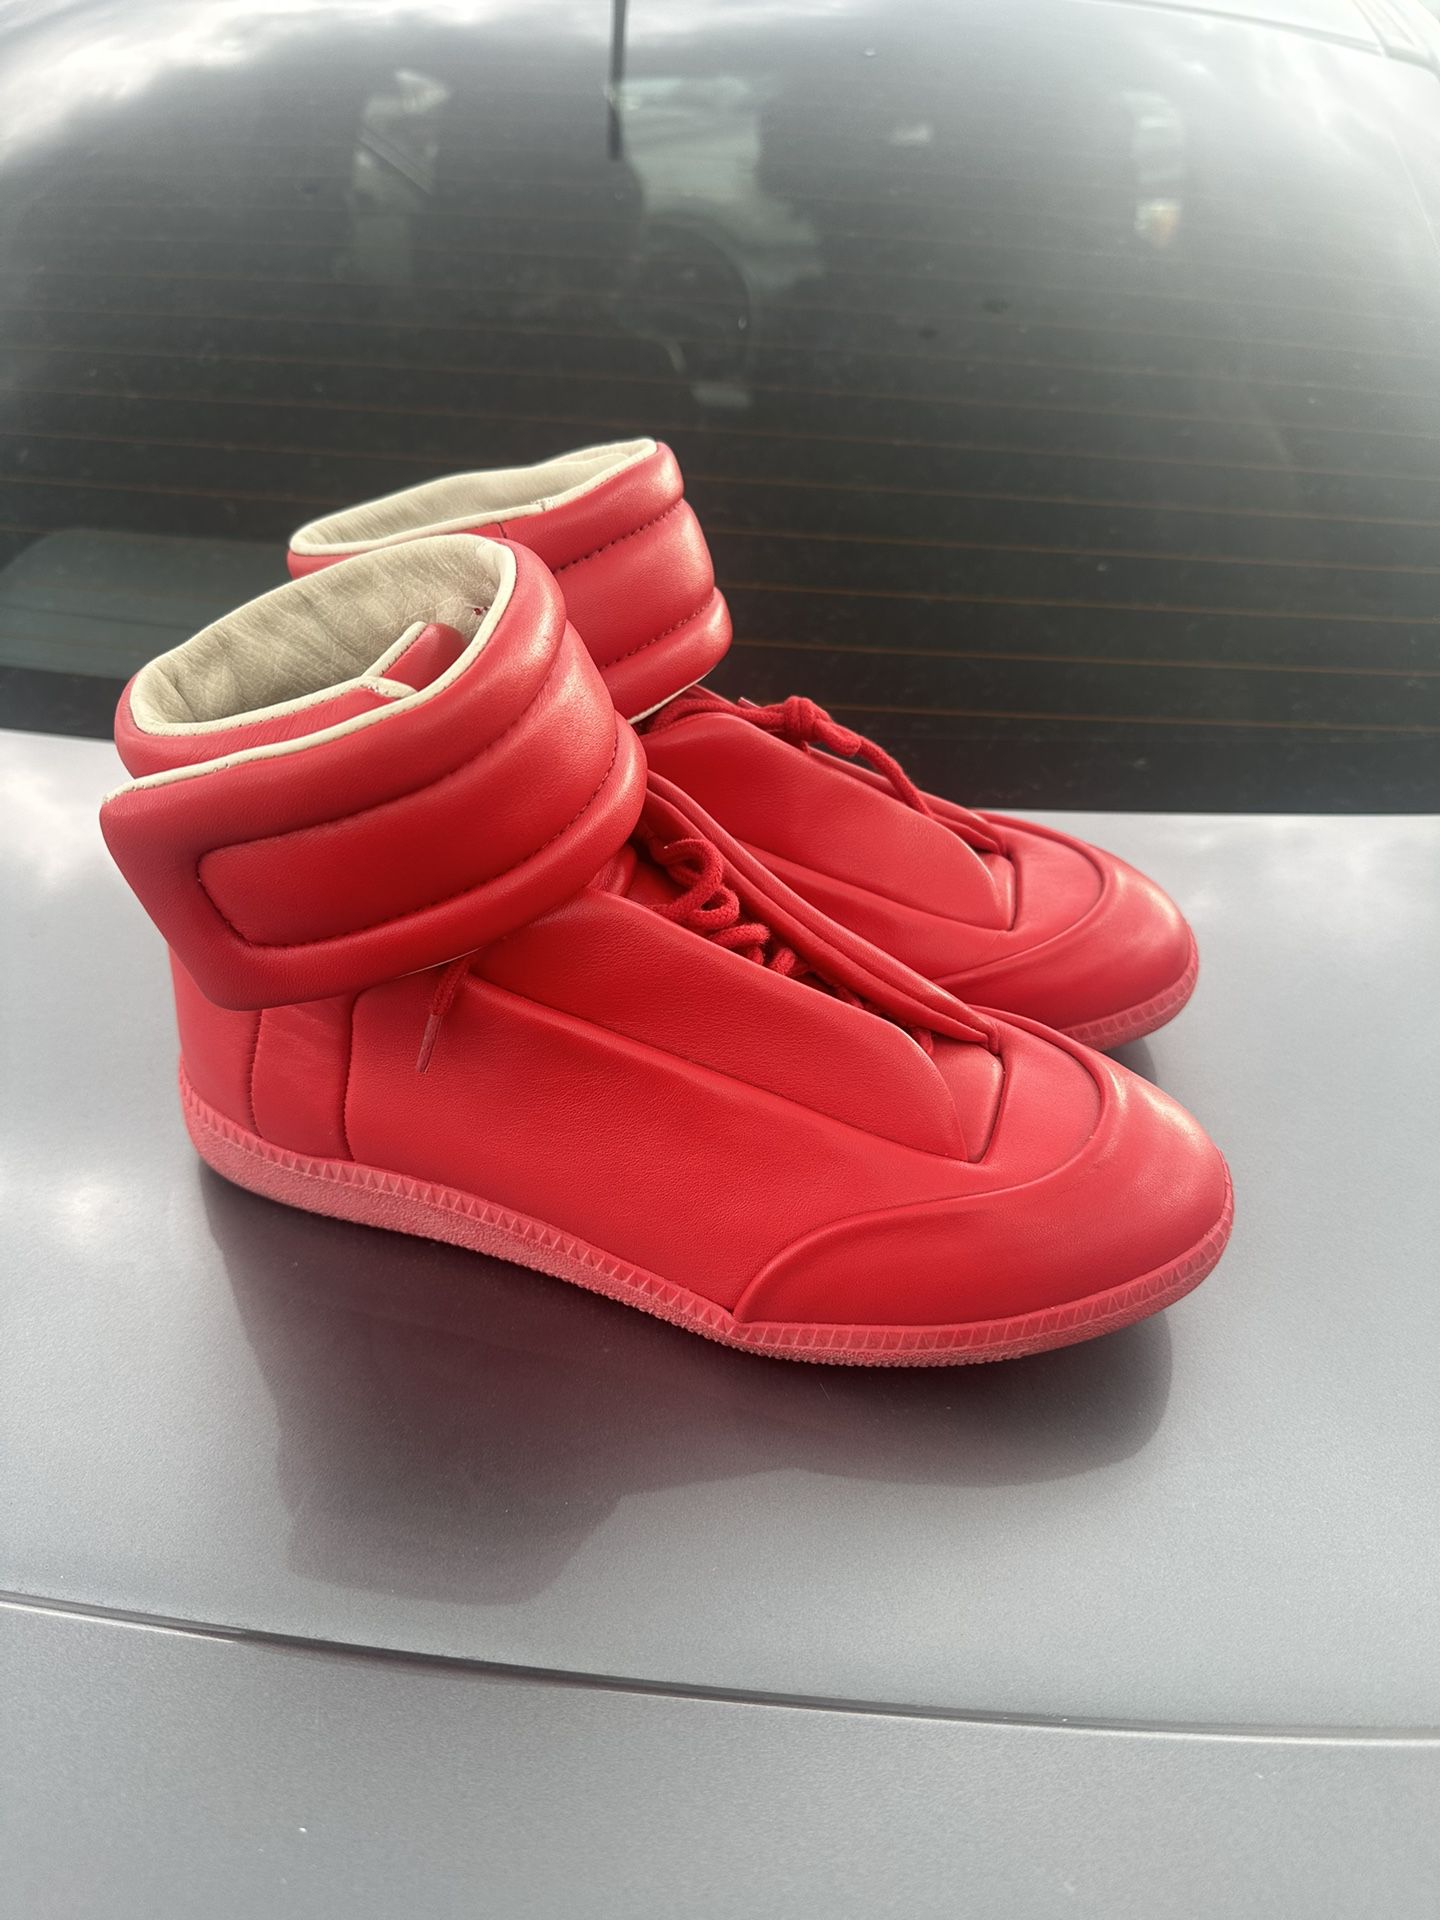 telex grad kontrollere Maison Margiela Sneakers 22 Red for Sale in Wht Settlemt, TX - OfferUp